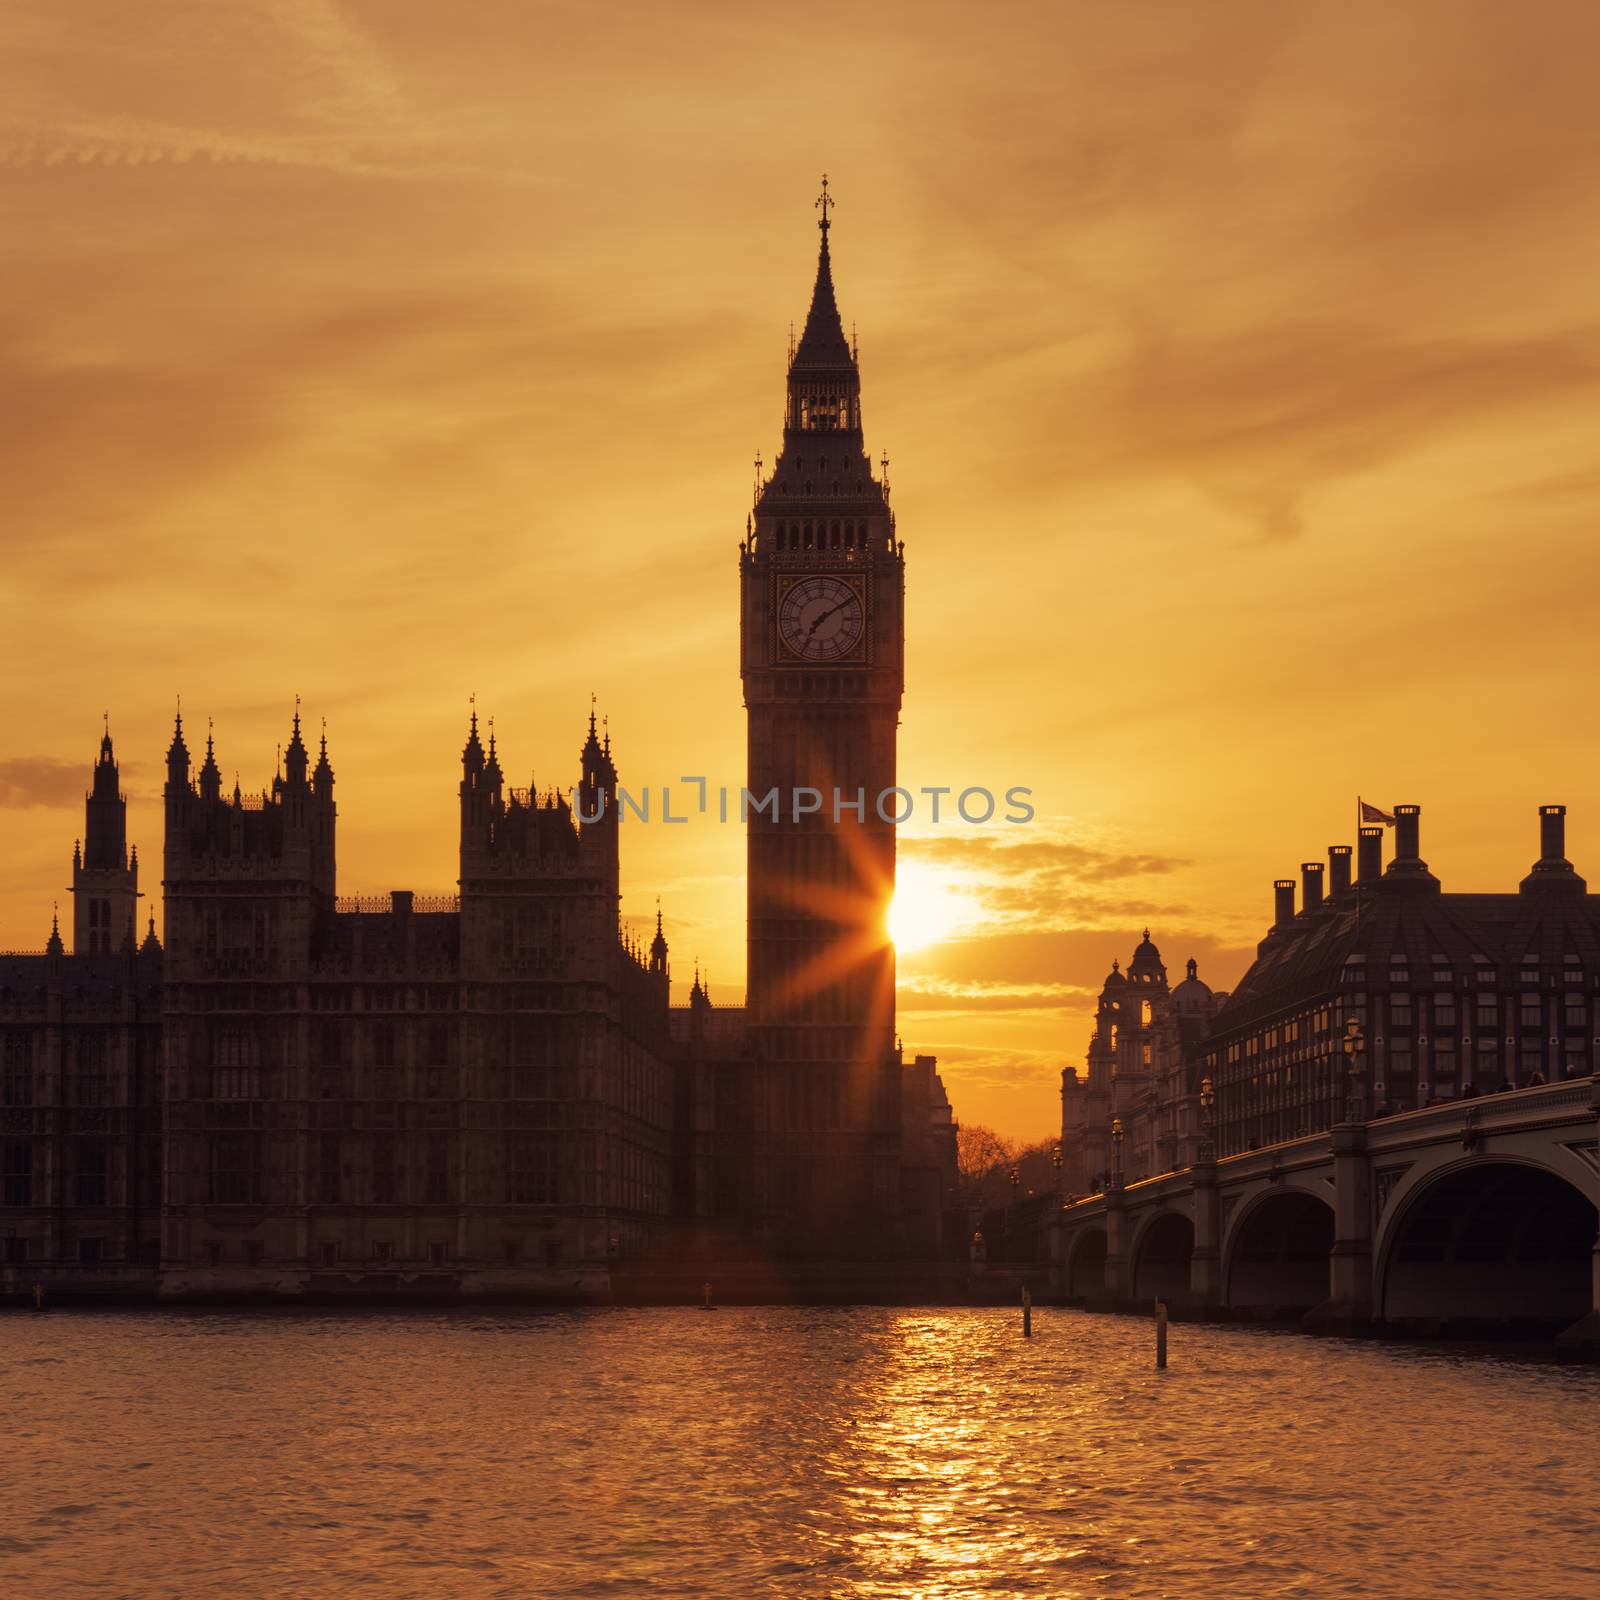 Big Ben clock tower in London at sunse by vwalakte